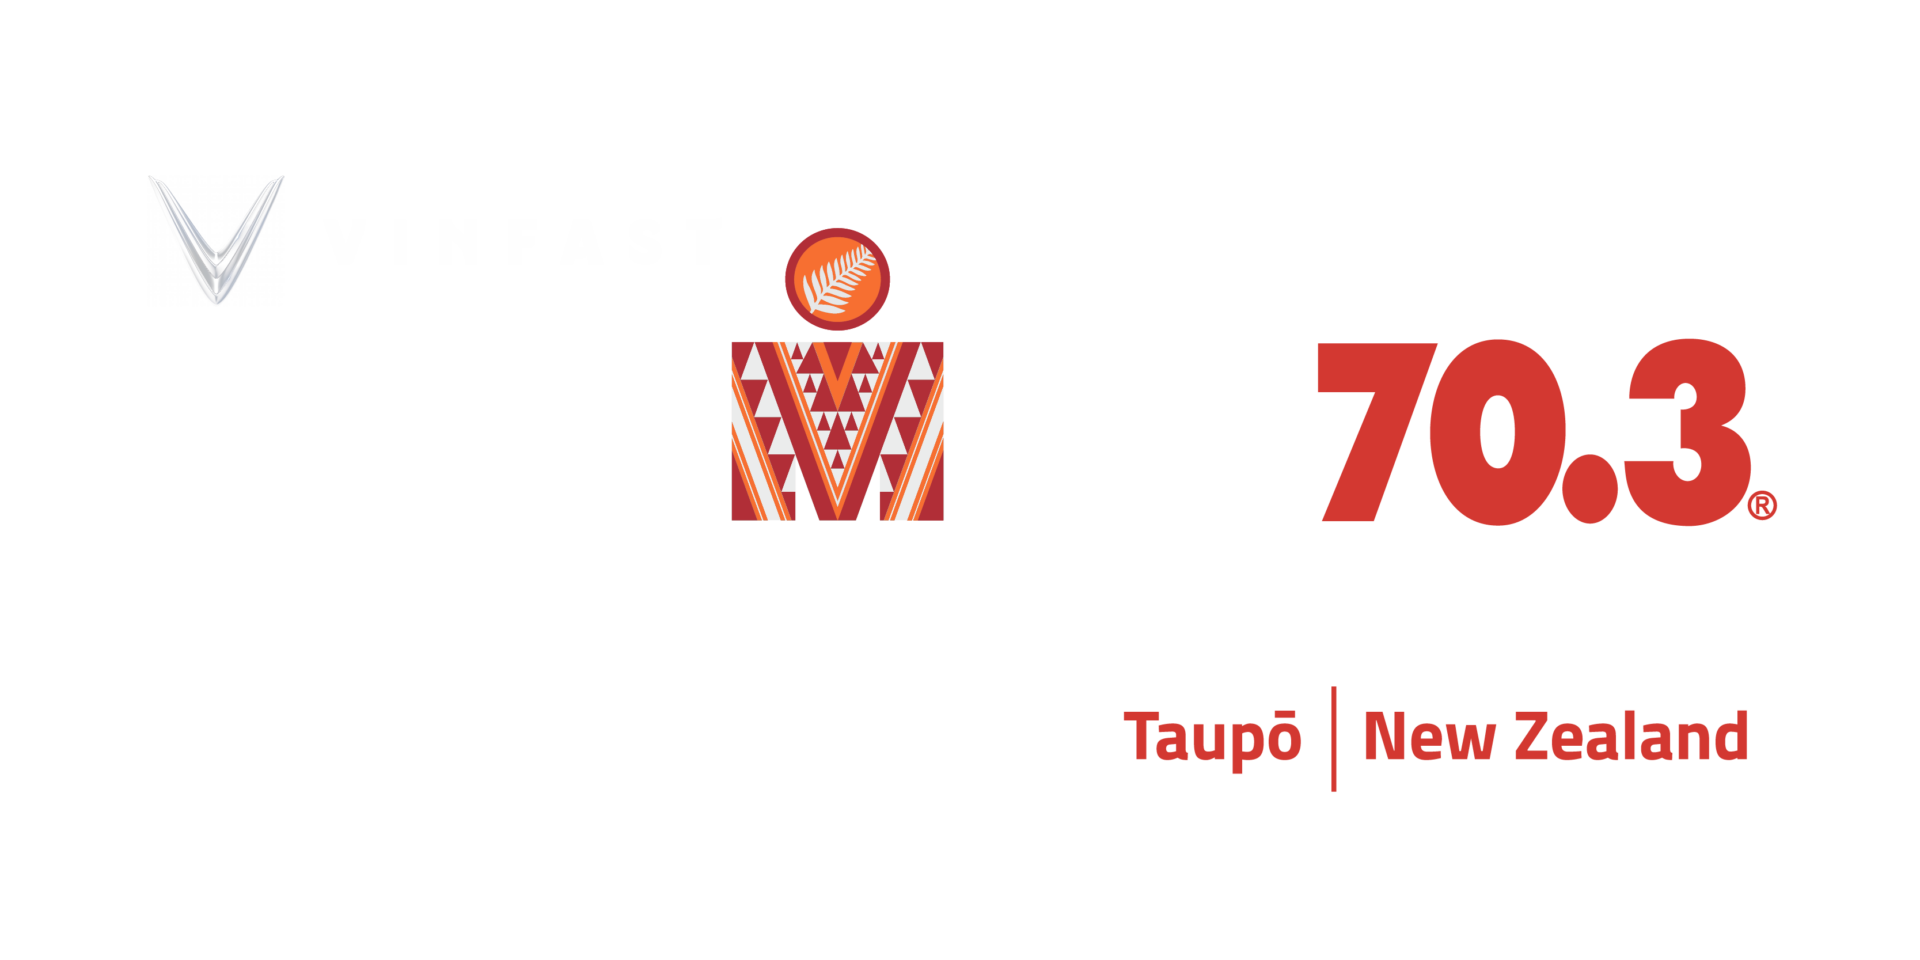 70.3 World Championship